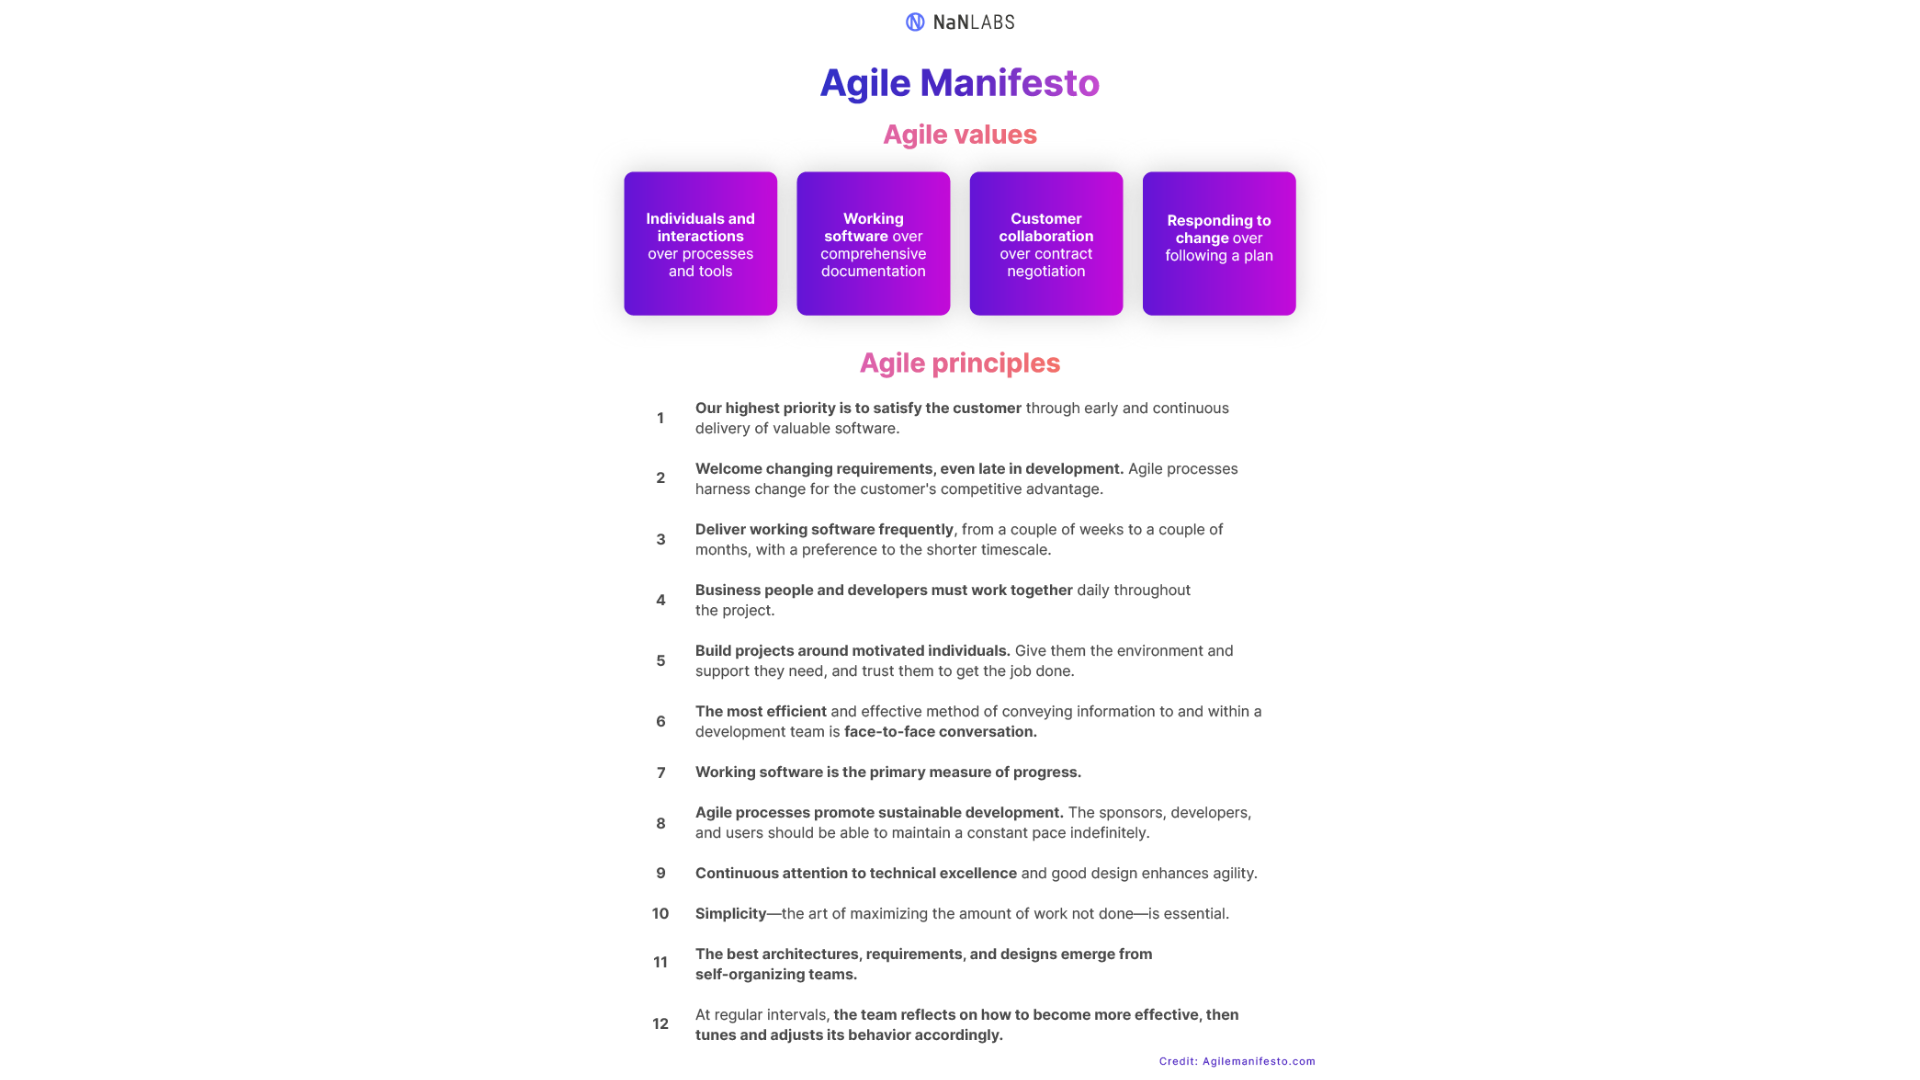 Visual representation of the Agile manifesto, its values and principles.